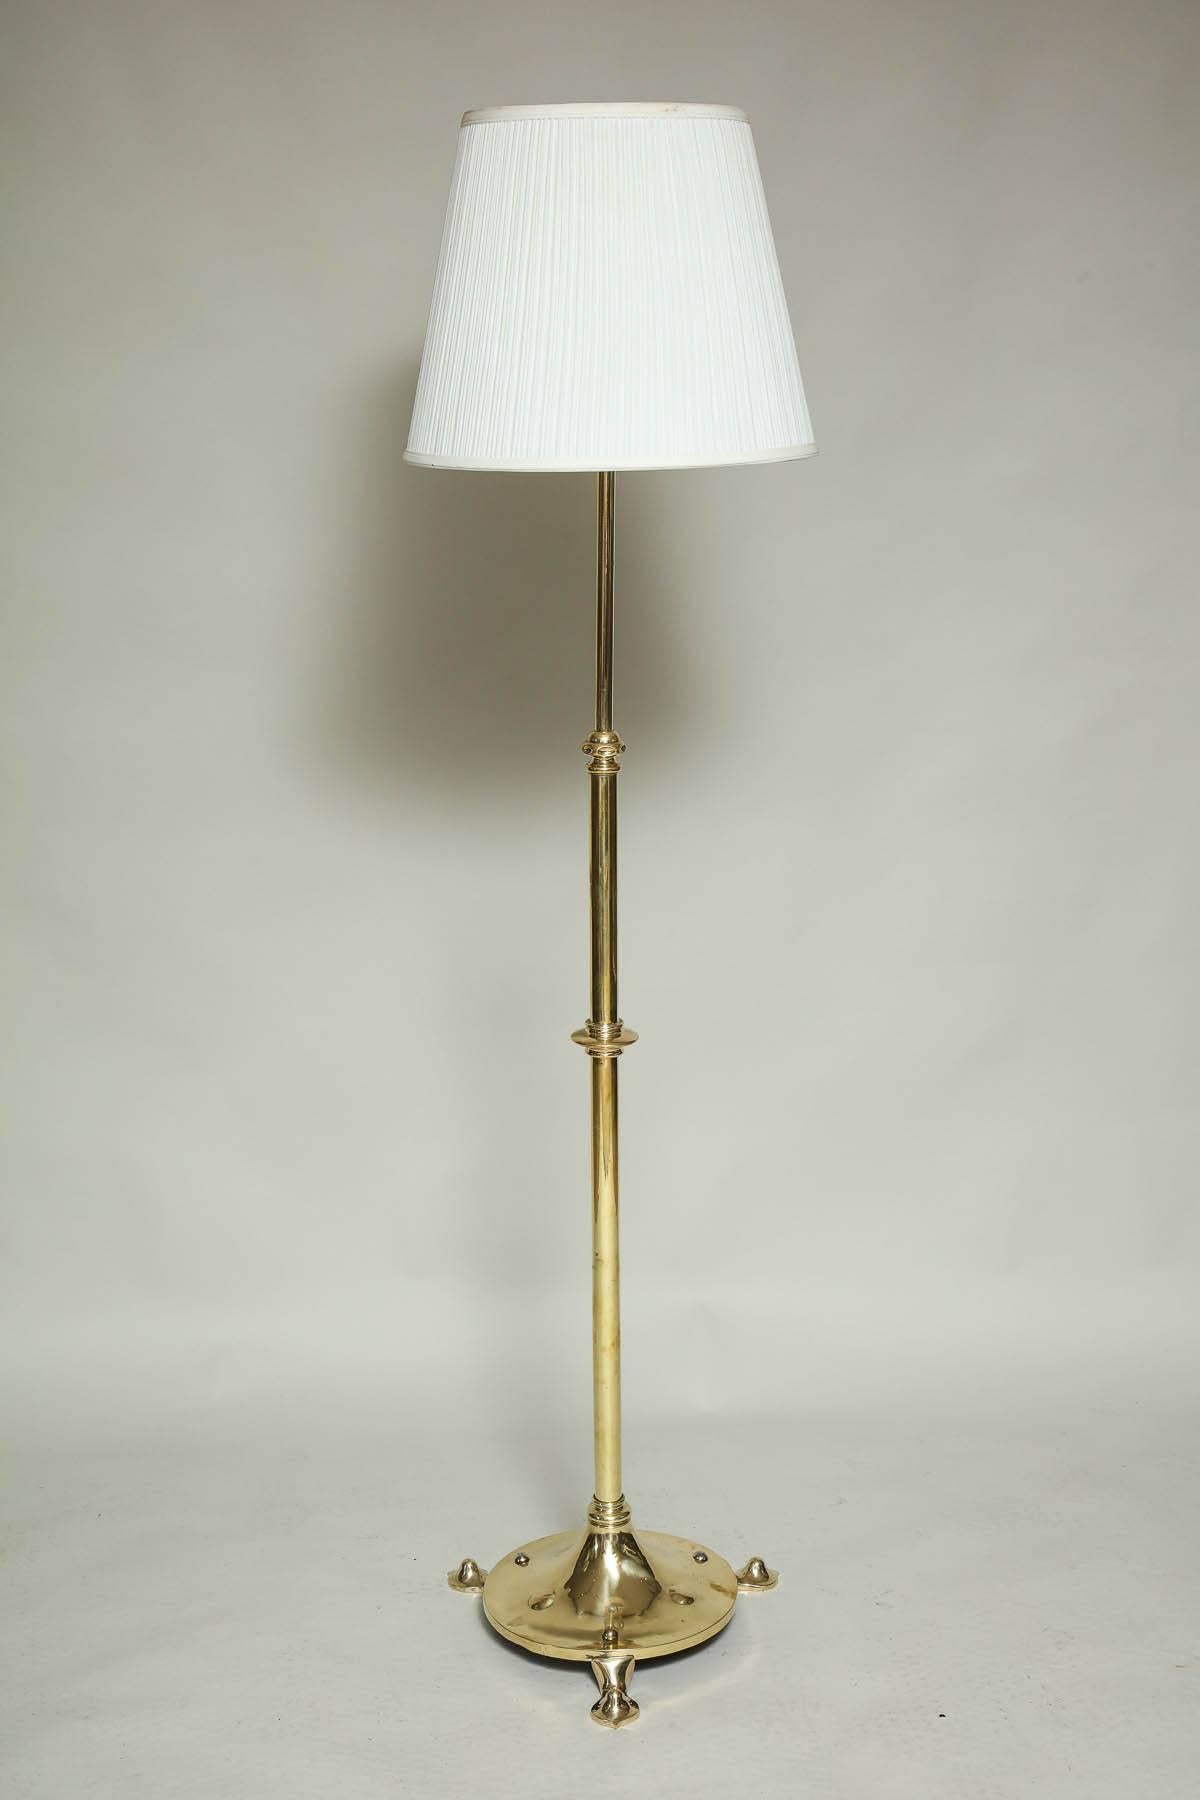 Early 20th Century Adjustable Brass Floor Lamp